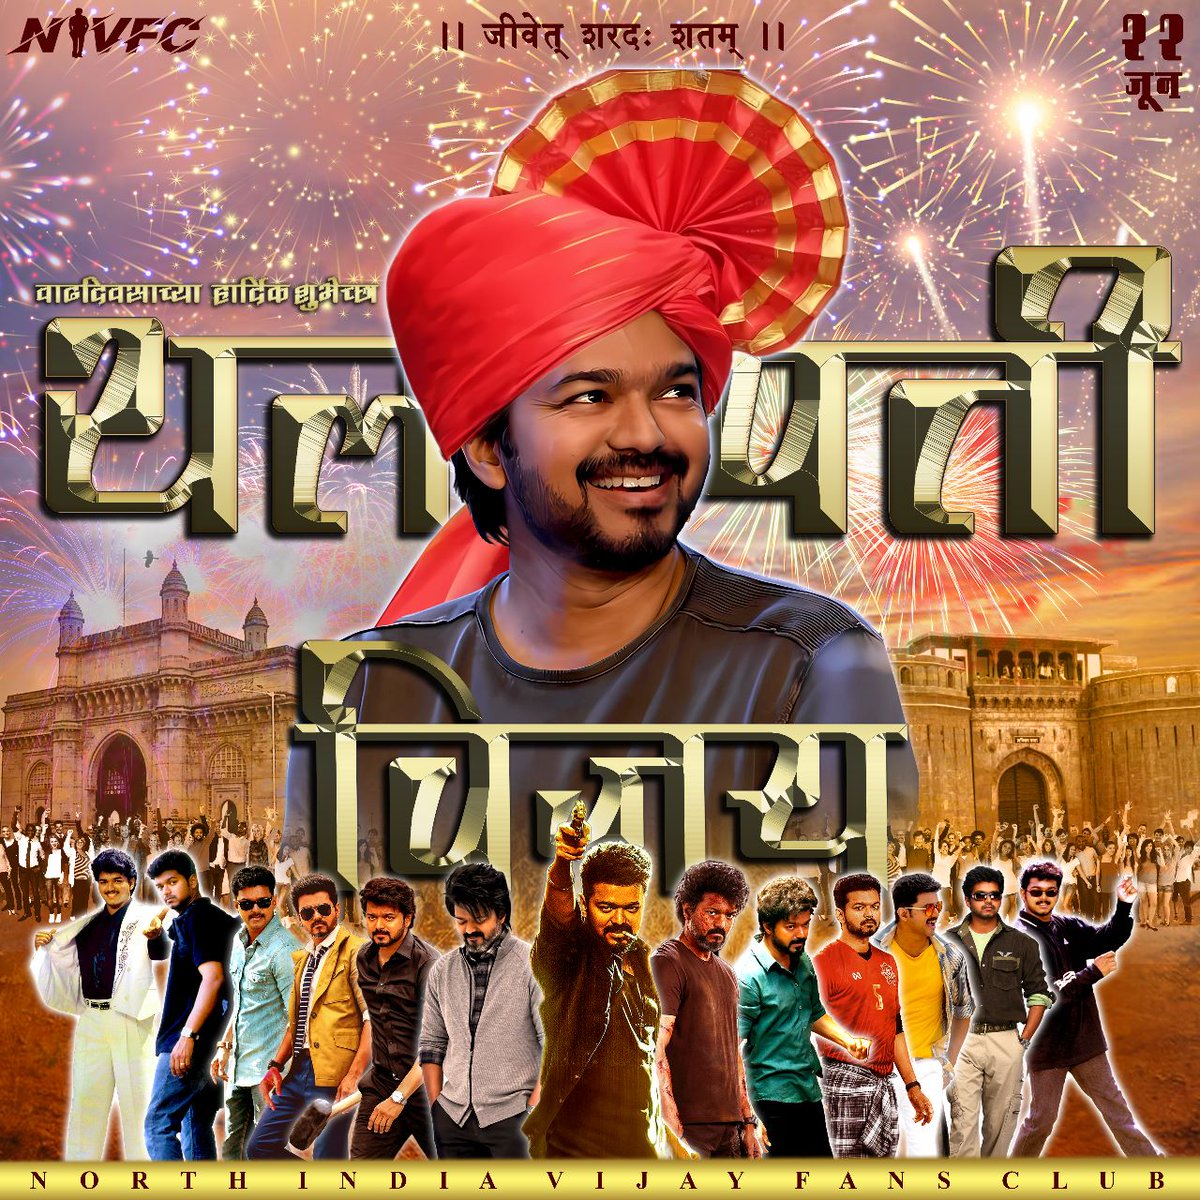 Marathi CDP to celebrate Our Thalapathy @actorvijay Birthday 👑 Designed By: @PatilGauravVJ ❤️ #थलपतिVIJAYजन्मपर्व #Leo